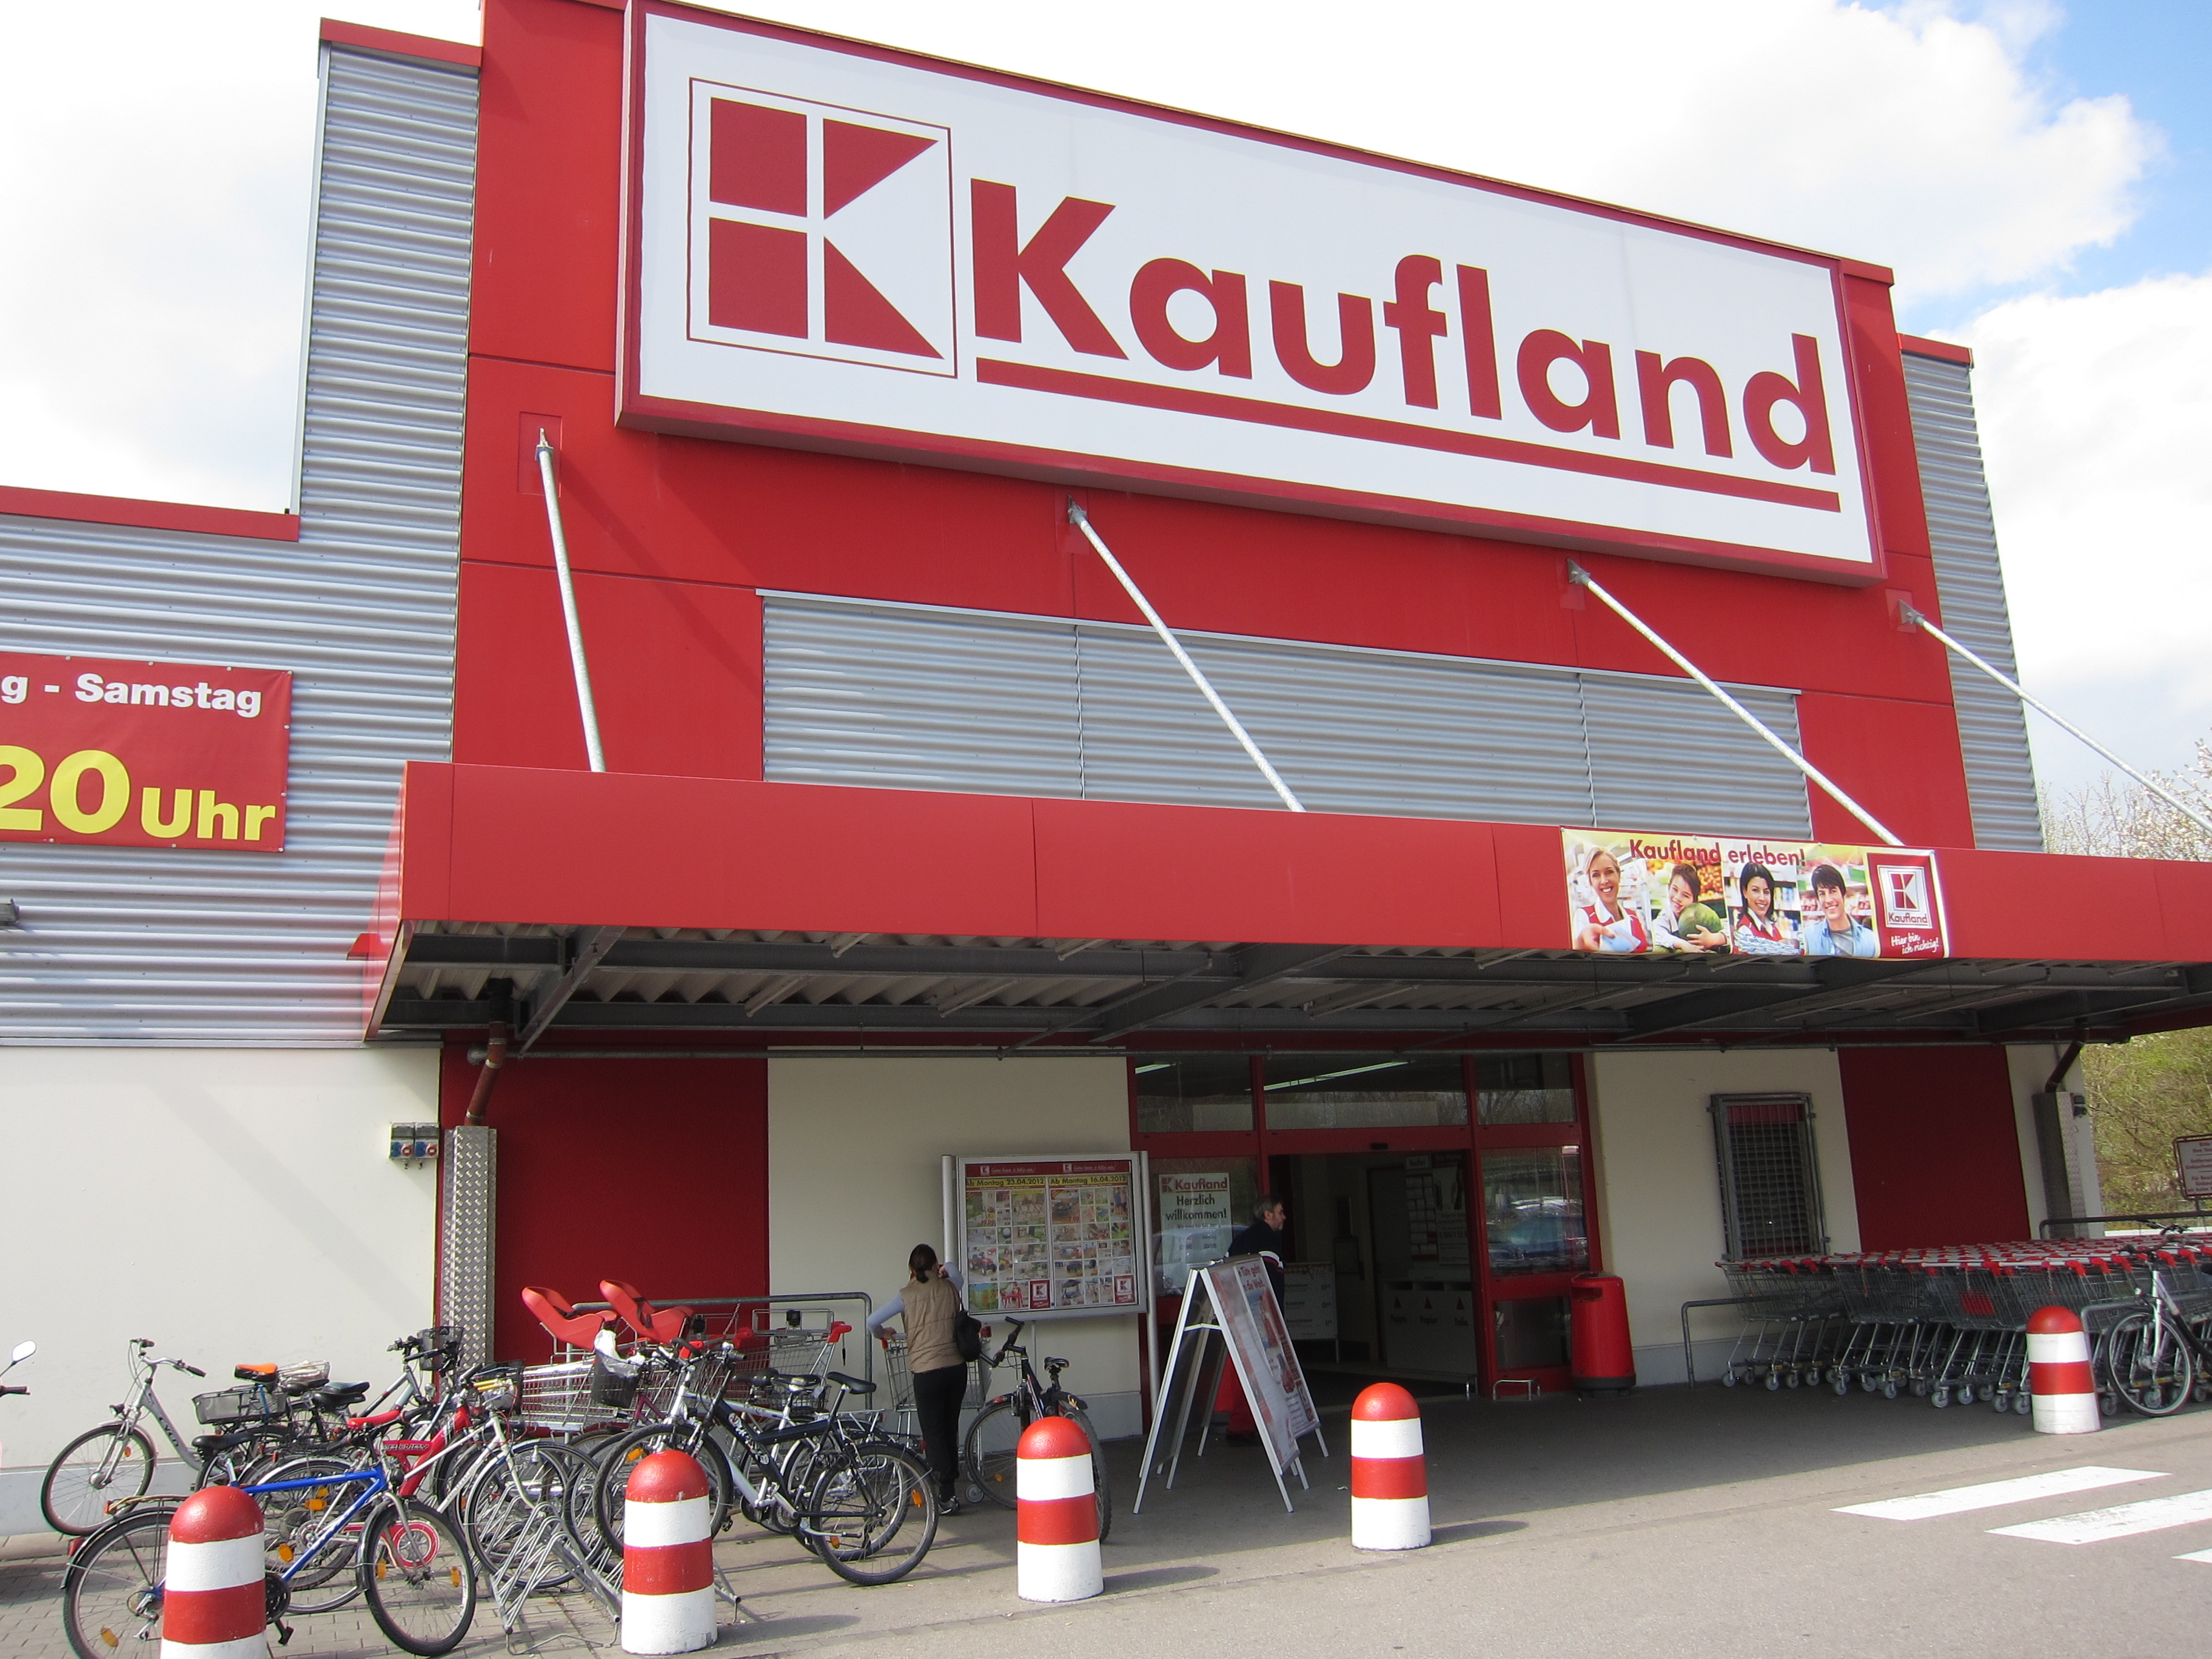 Kaufland Grocery Store in Munich Germany